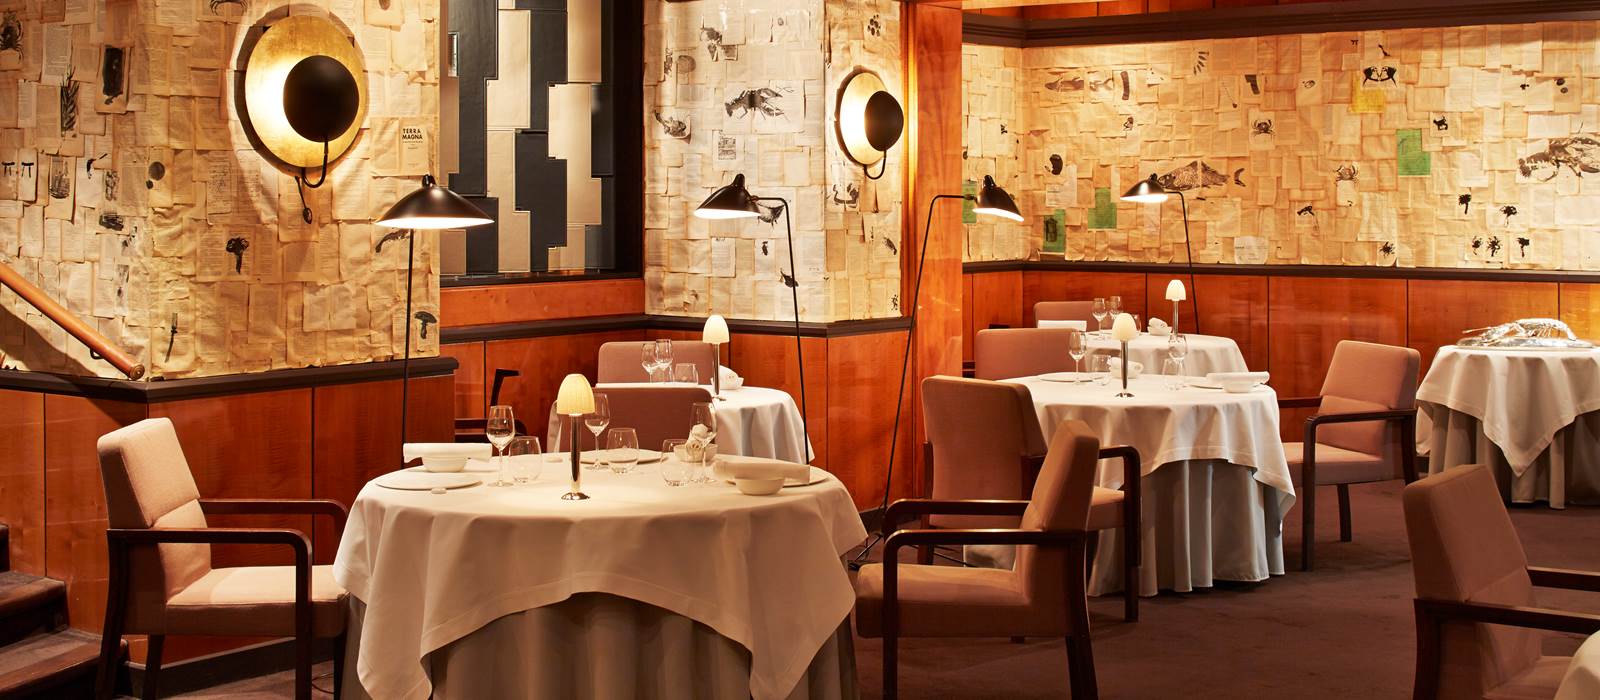 Pierre Gagnaire Restaurant Hotel Balzac Paris